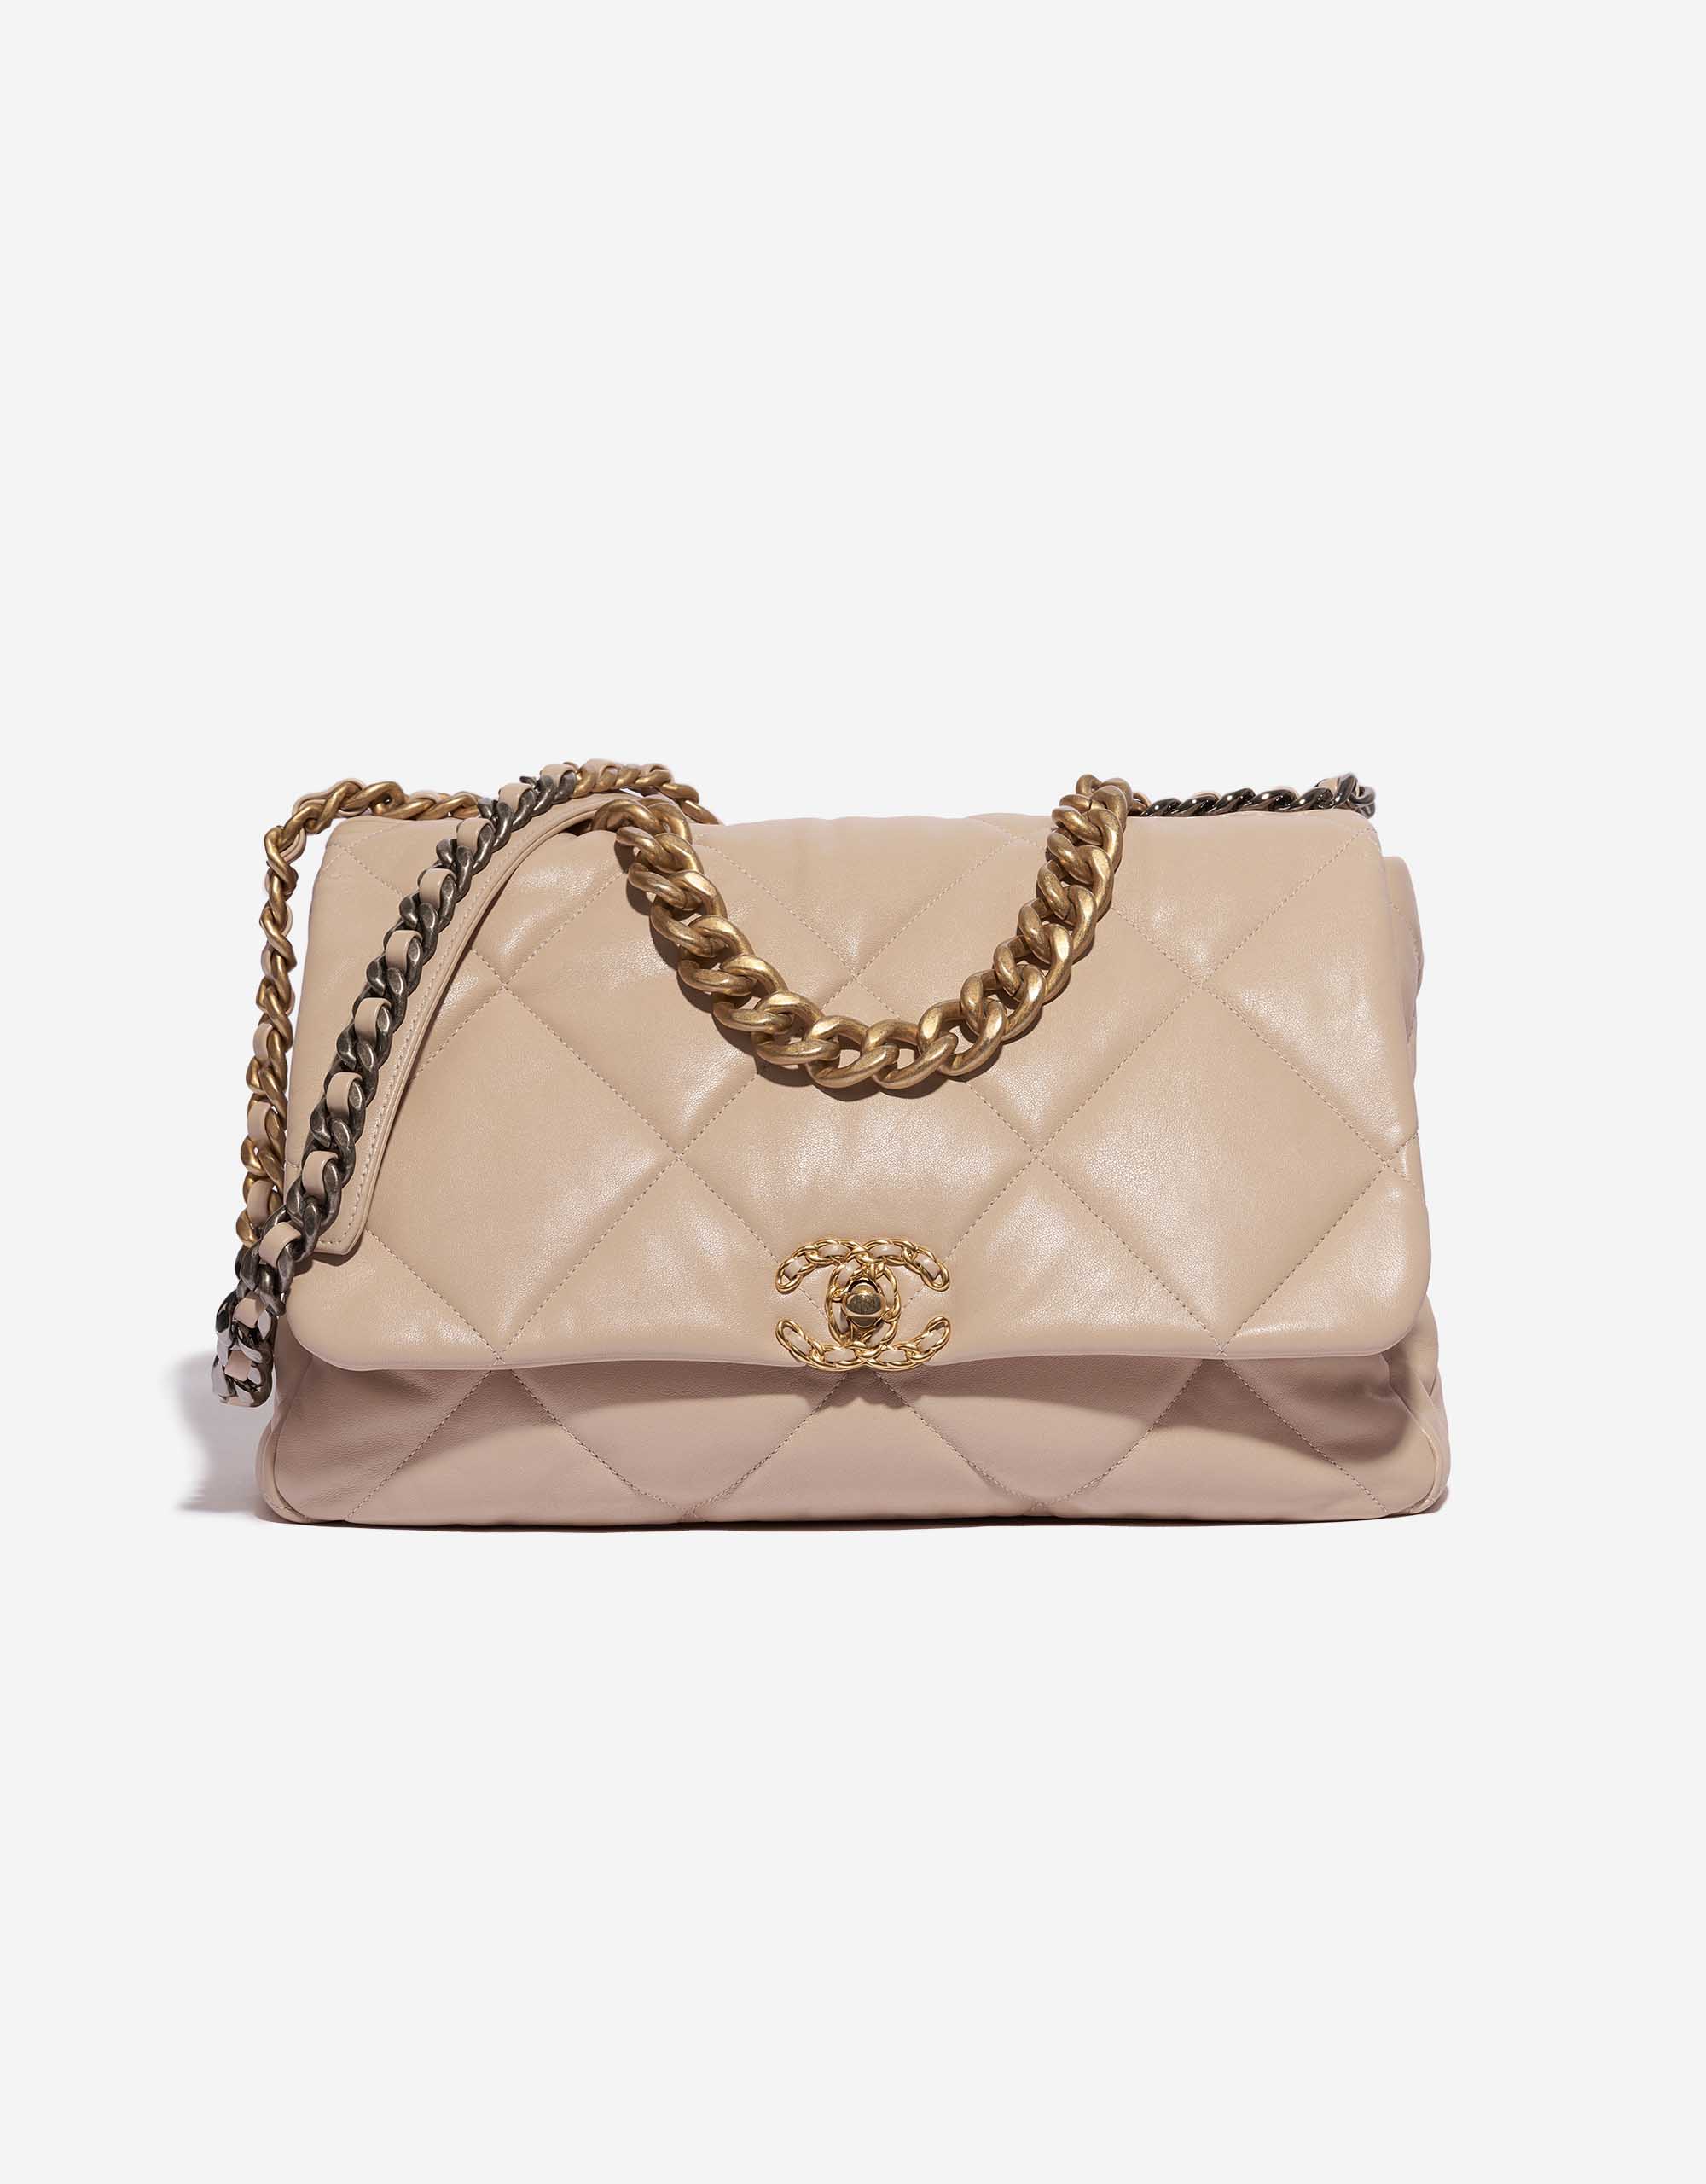 Chanel Beige Leather Bag  Bags, Black handbags, Chanel bag